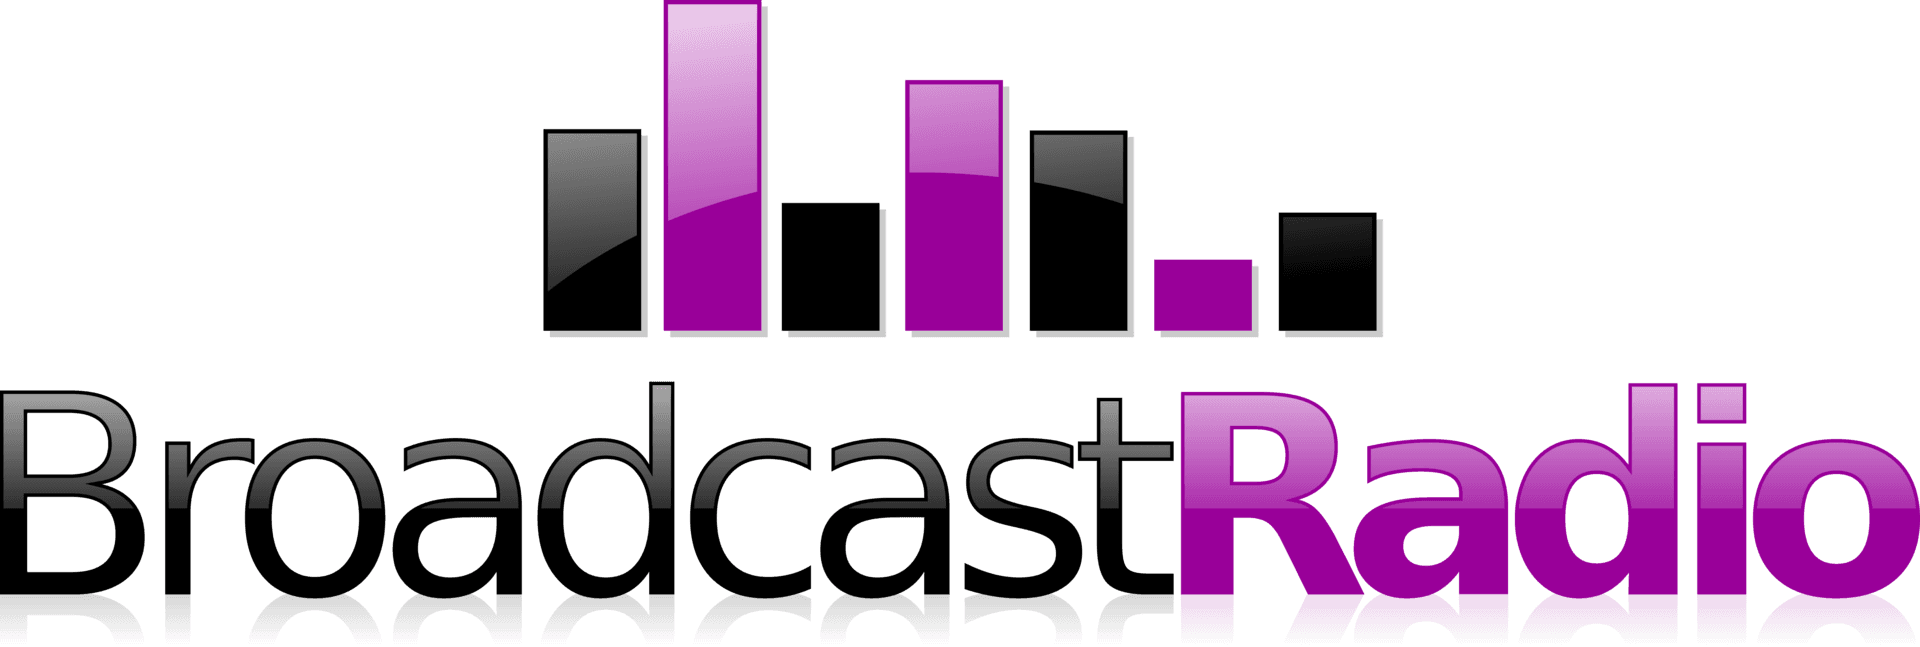 A purple and black logo for broadcast radio